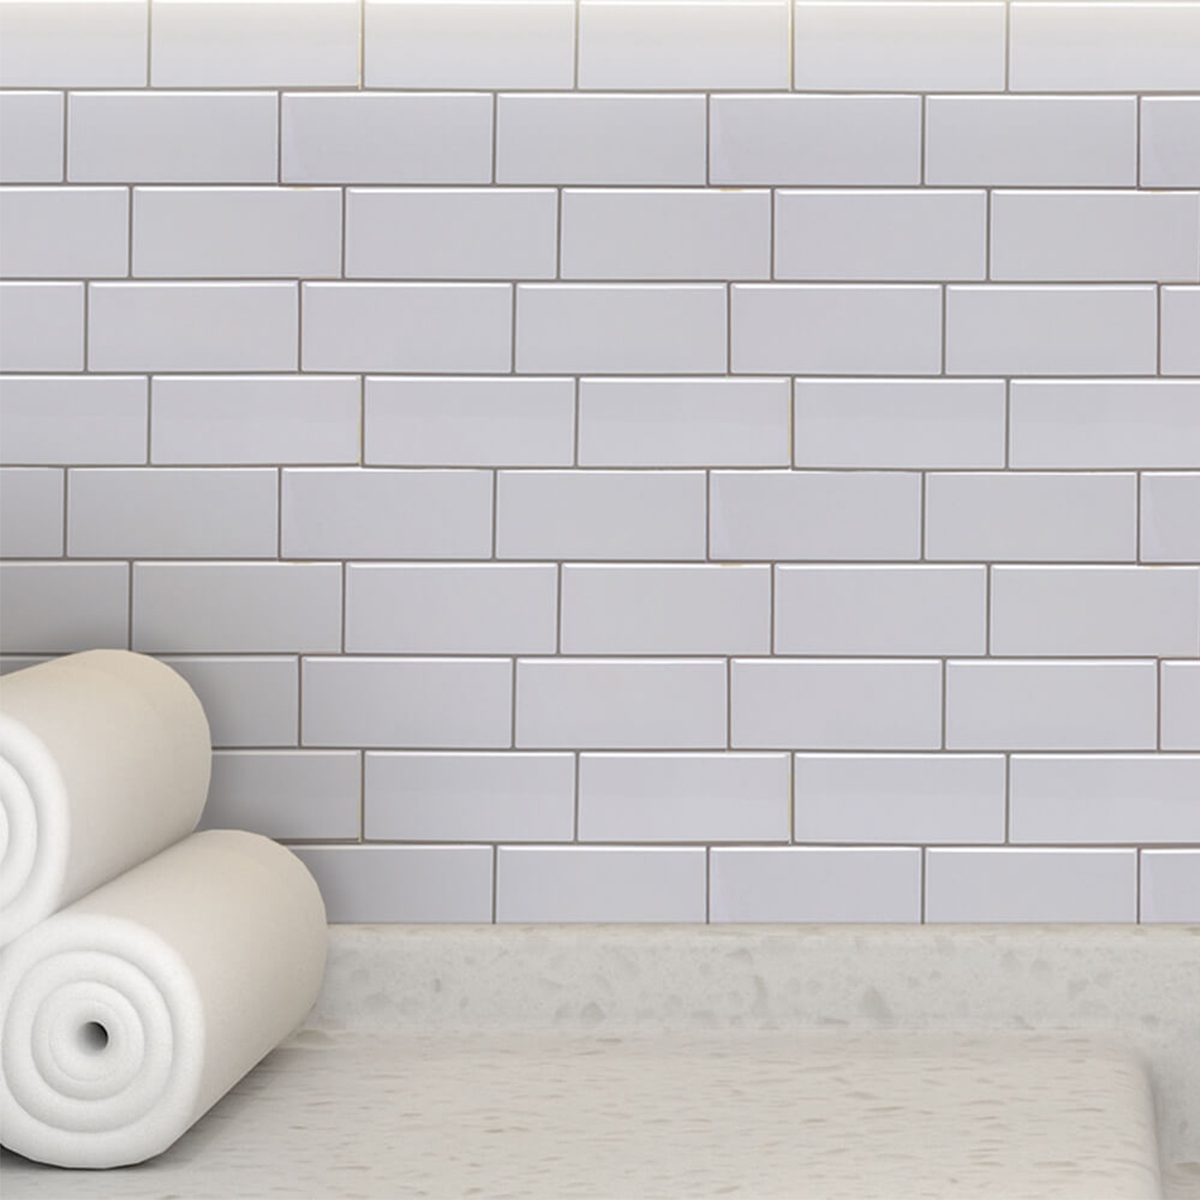 12inch-DIY-Tile-Stickers-3D-Brick-Wall-Self-adhesive-Sticker-Bathroom-Kitchen-1802619-2